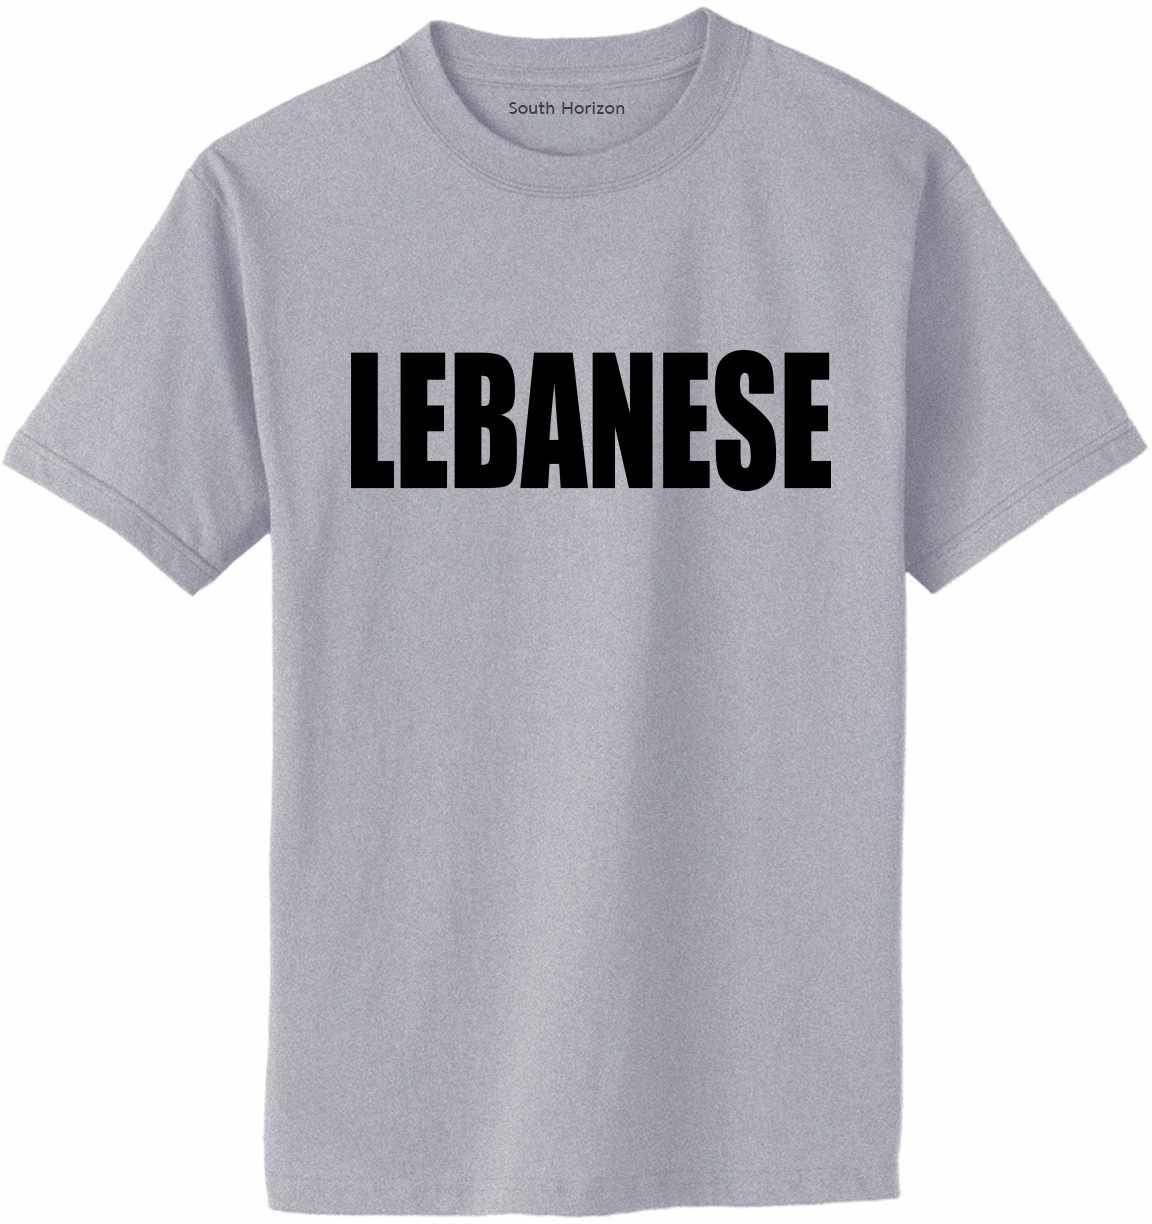 LEBANESE on Adult T-Shirt (#843-1)